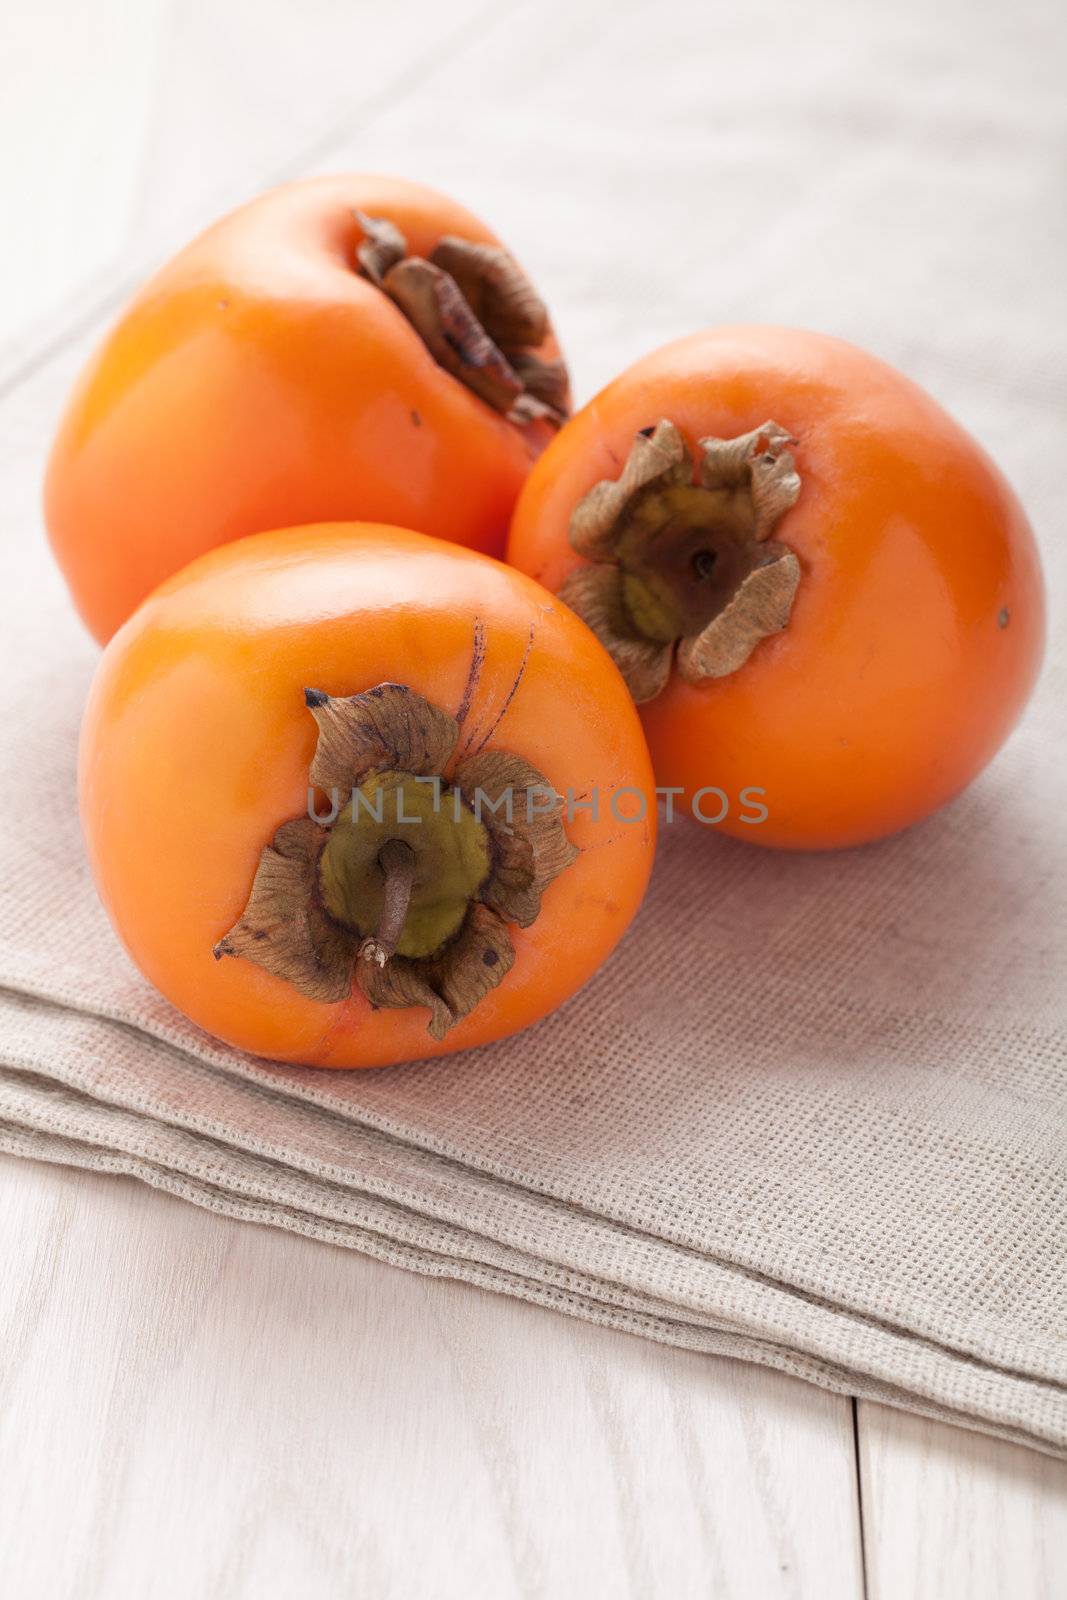 Fresh exotic tropic ripe juicy orange fruits  persimmon Diospyros served on textile towel